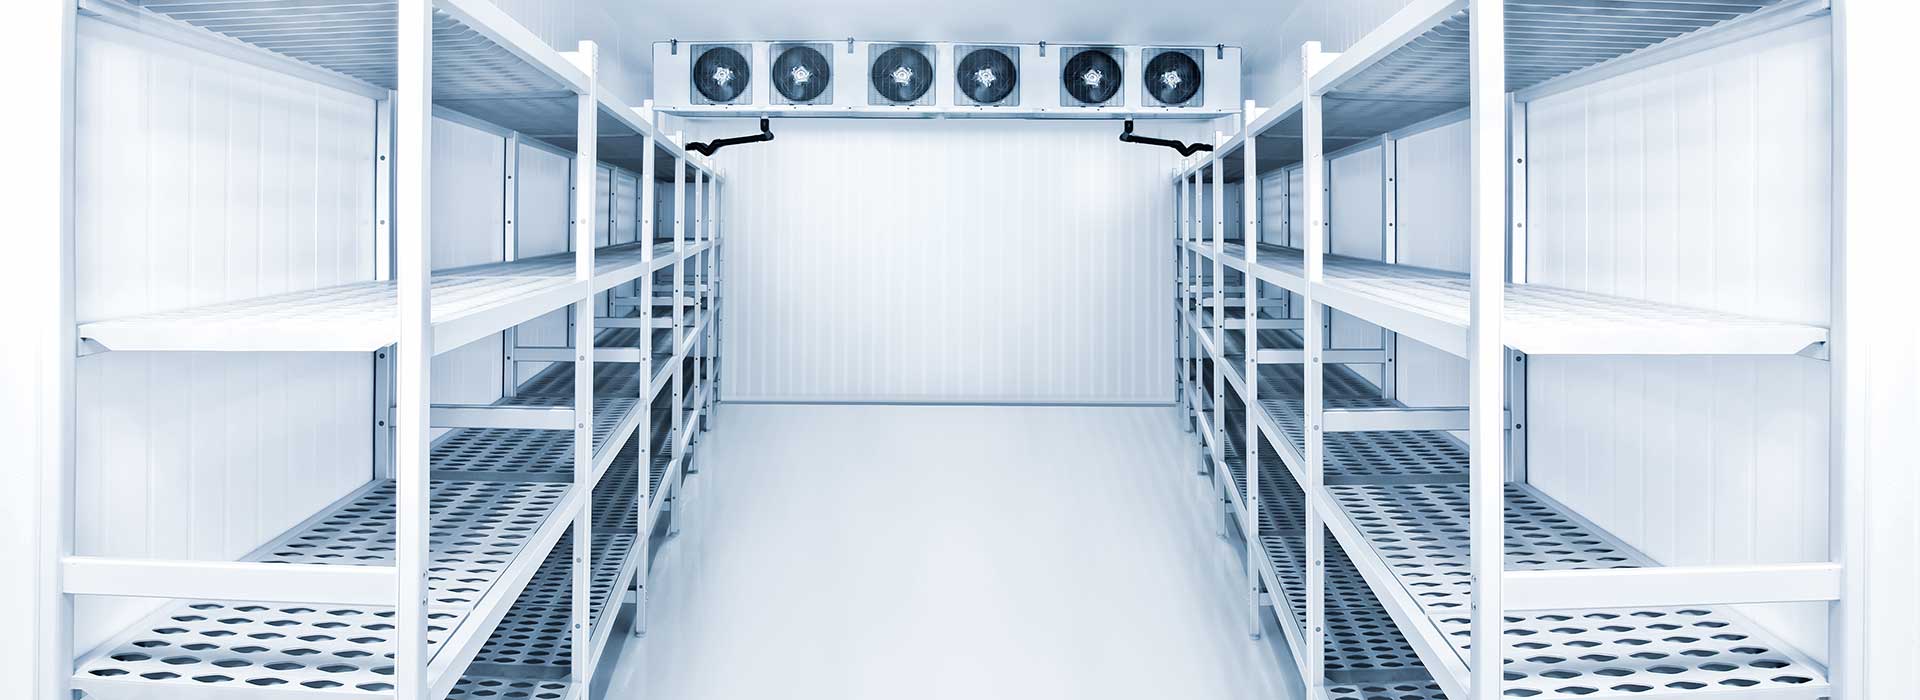 Applications of Refrigeration